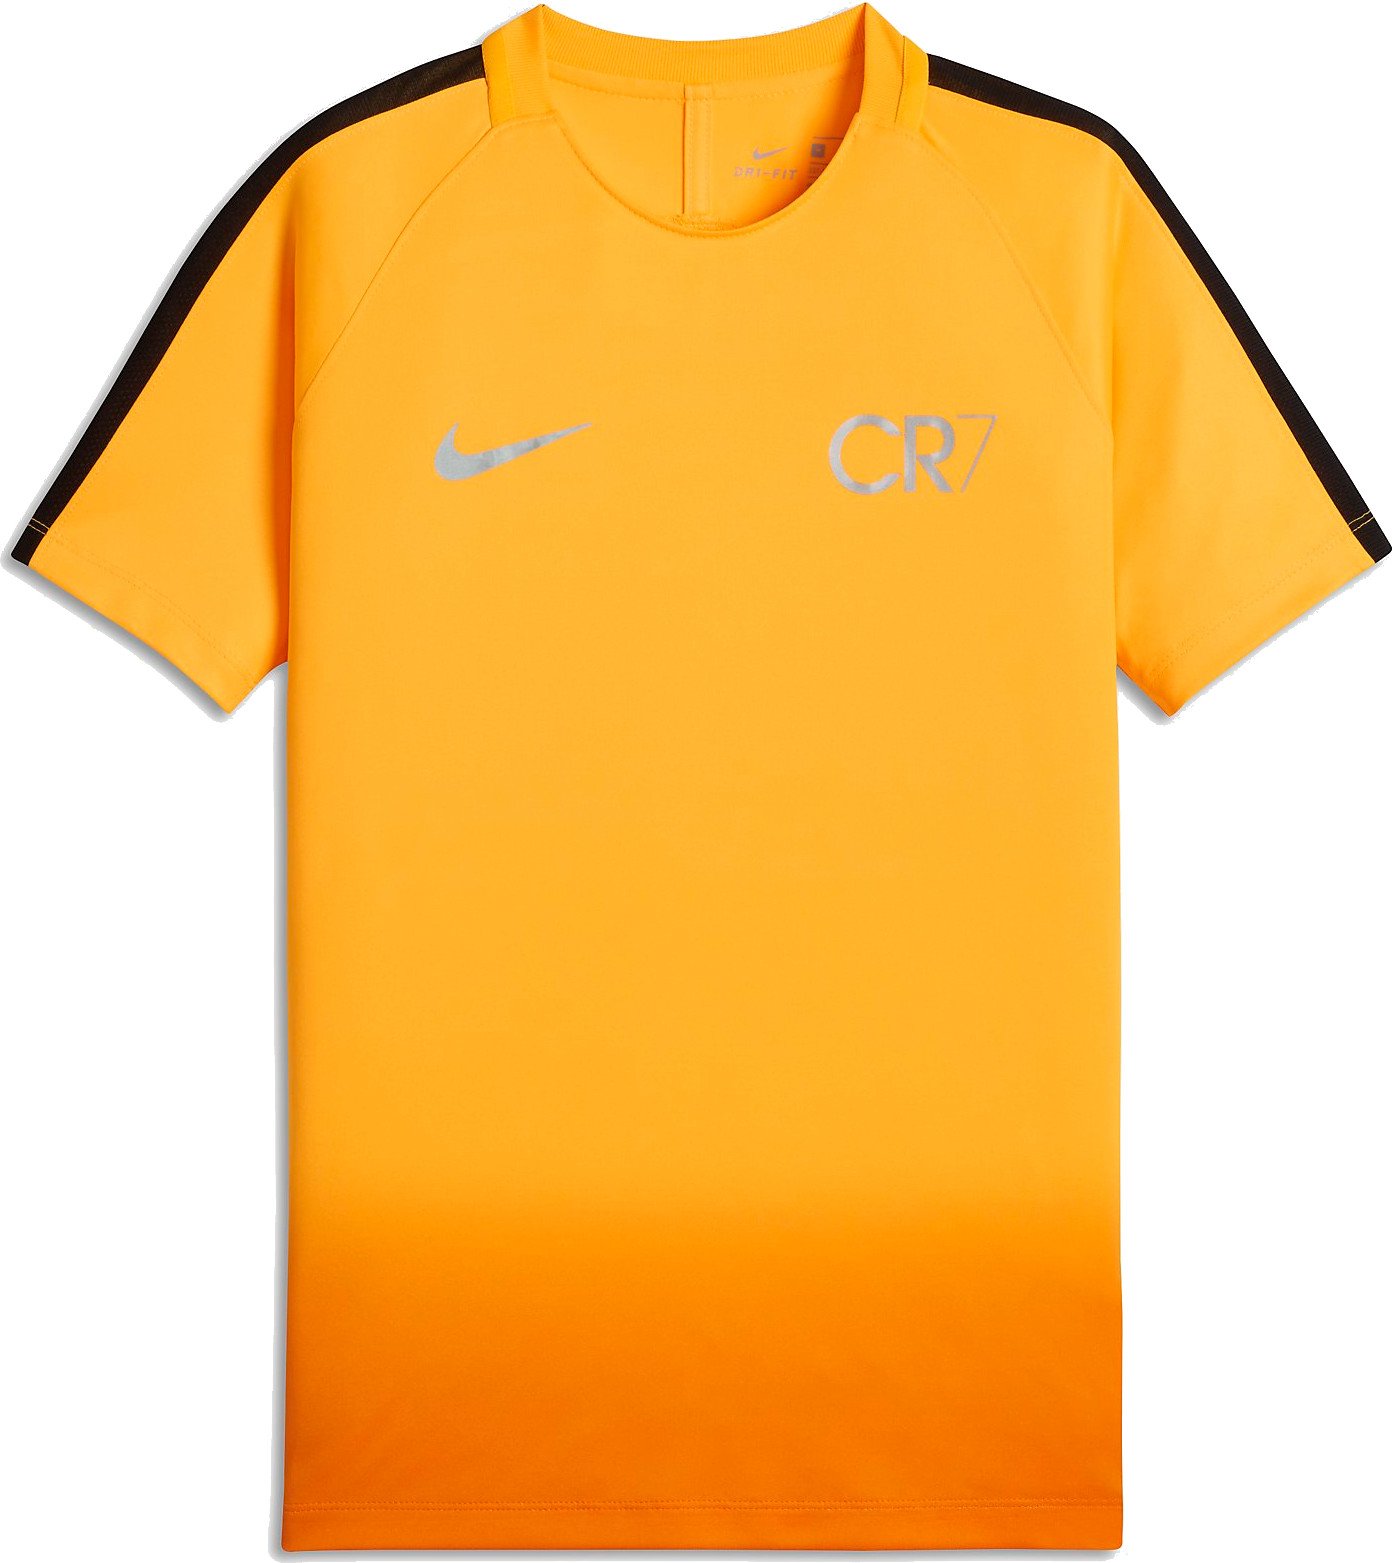 Dětské fotbalové triko s krátkým rukávem Nike Dry Squad CR7